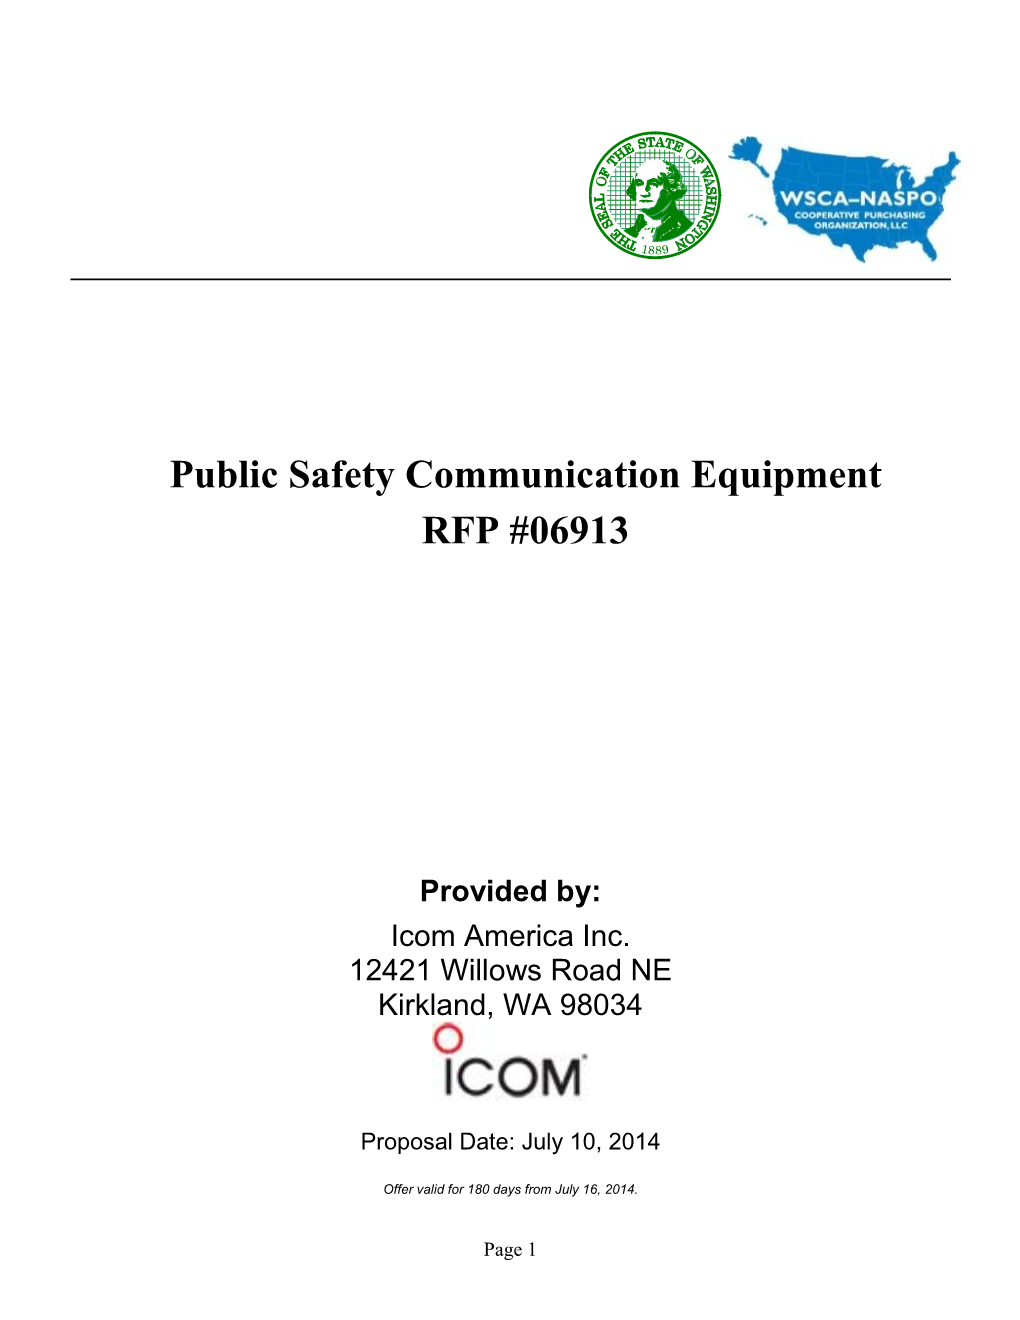 Public Safety Communication Equipment RFP #06913